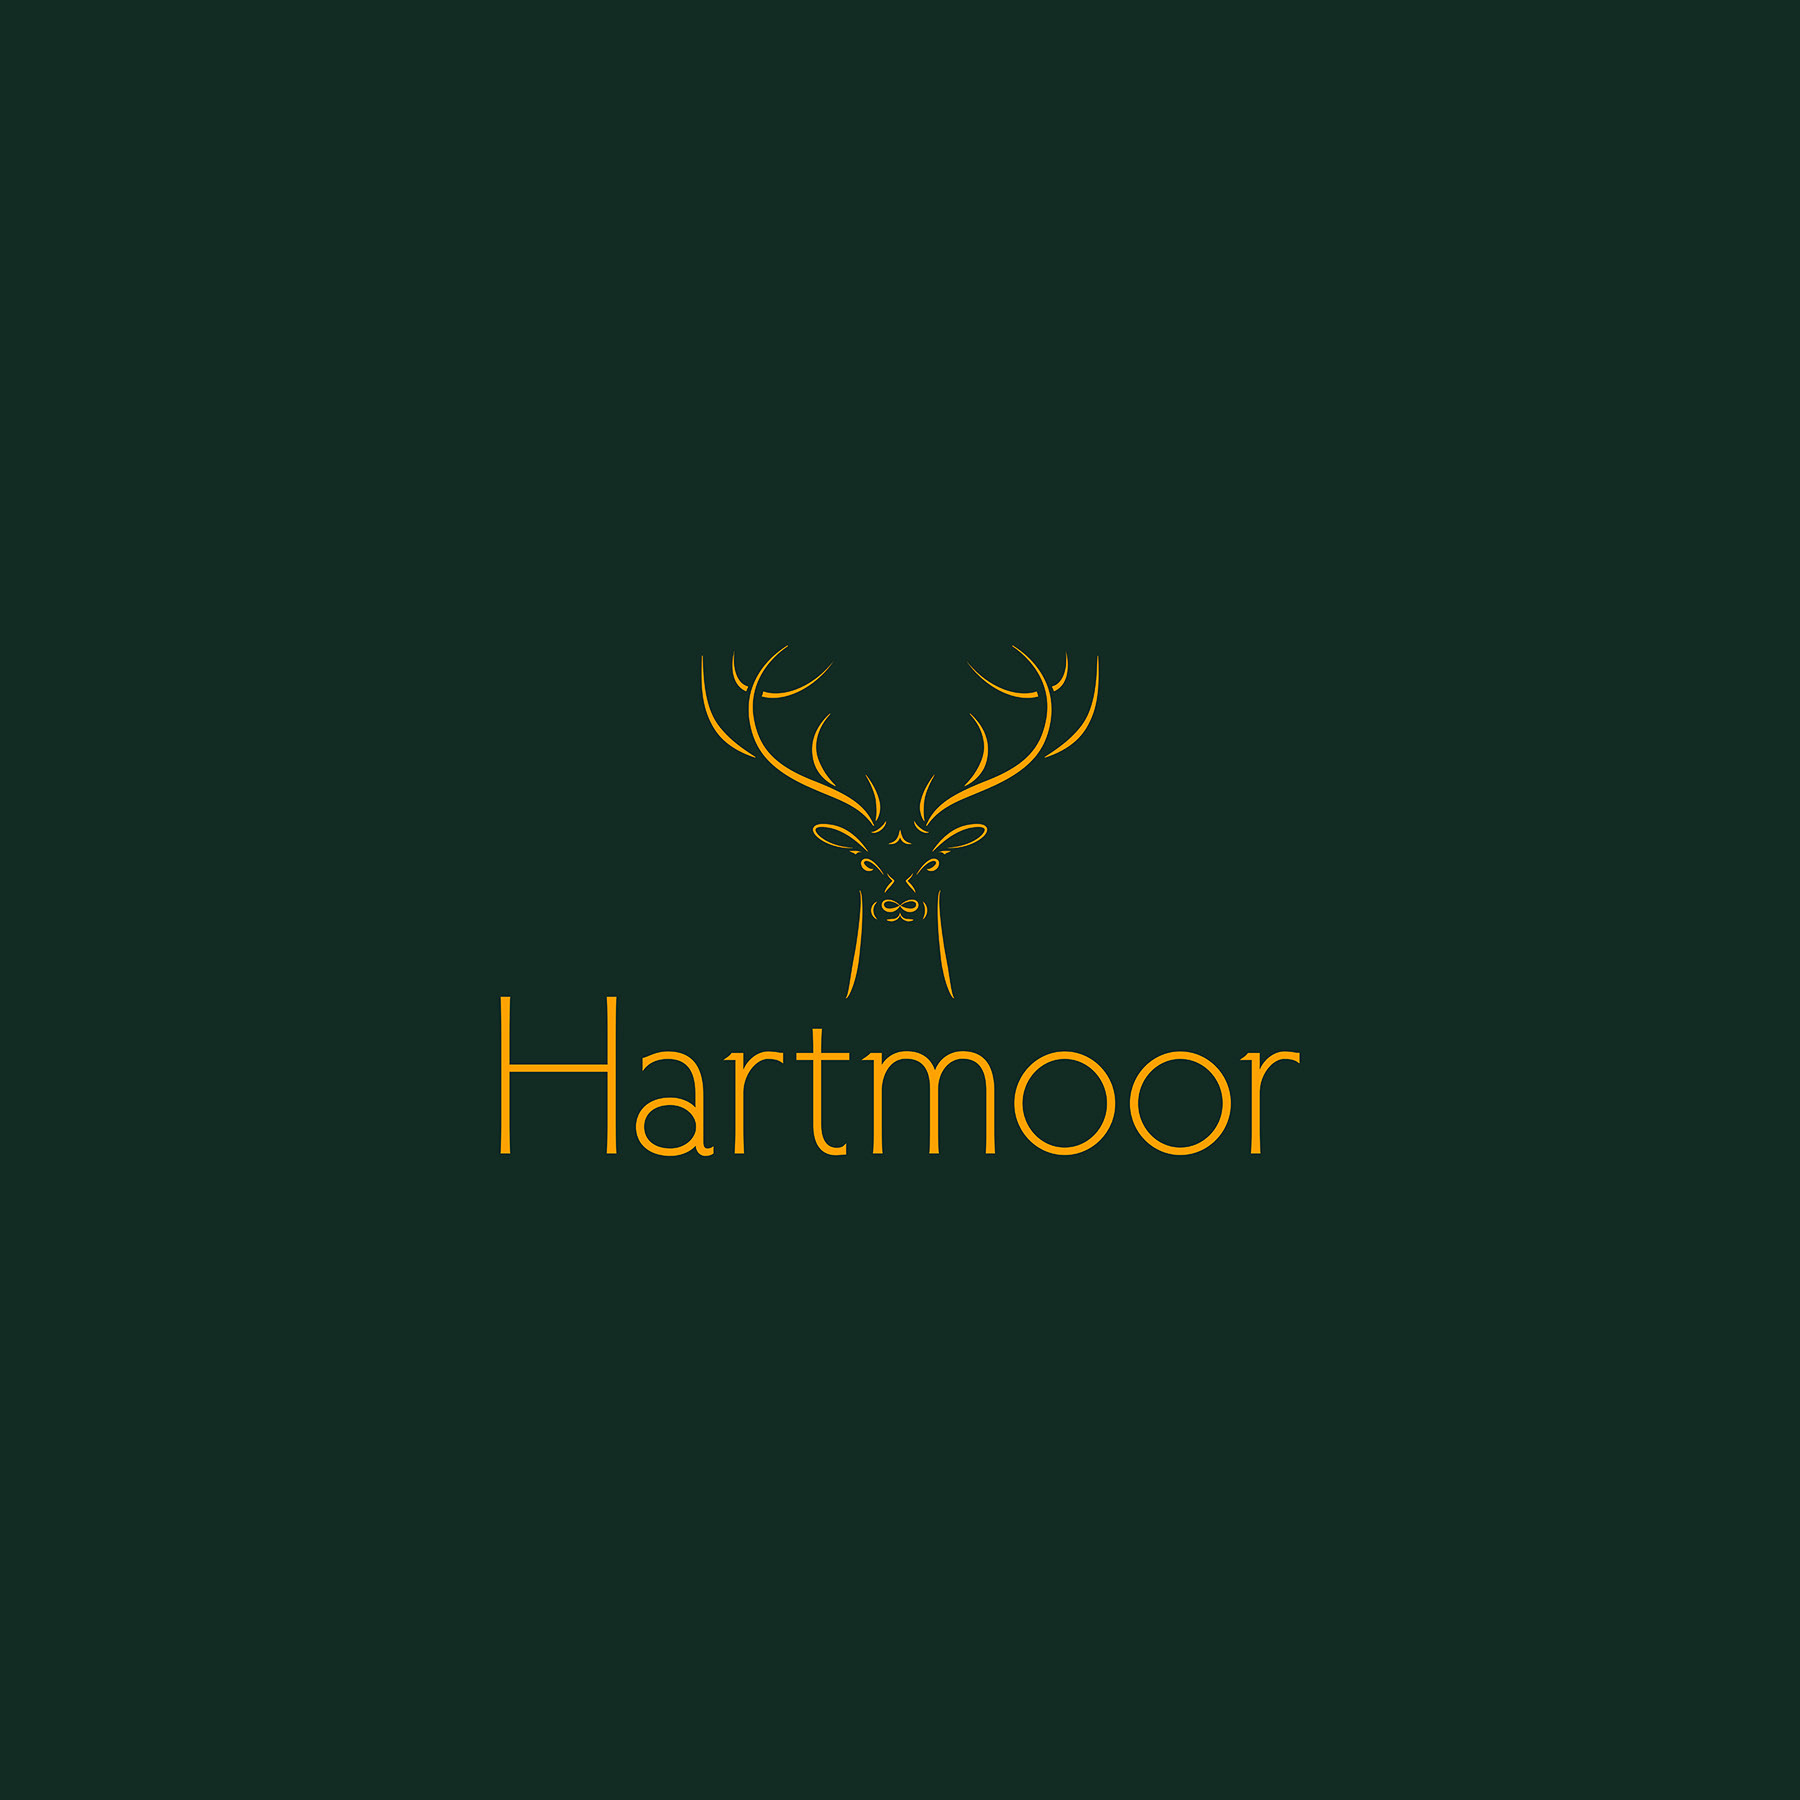 badduck design - hartmoor financial